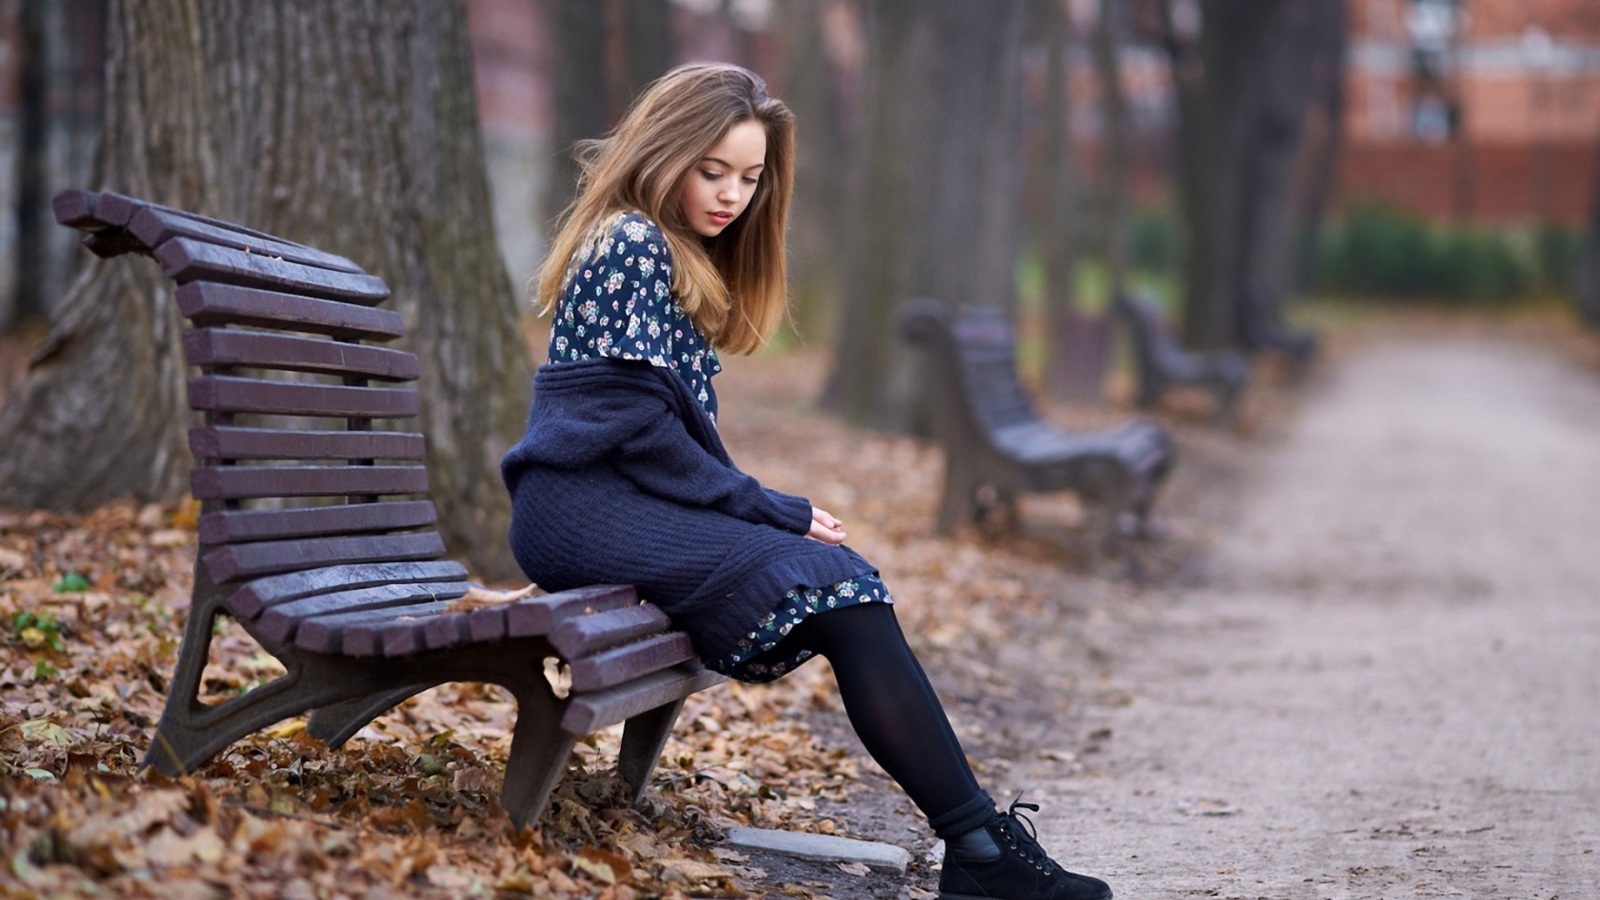 Обои Beautiful Girl Sitting On Bench In Autumn Park 1600x900